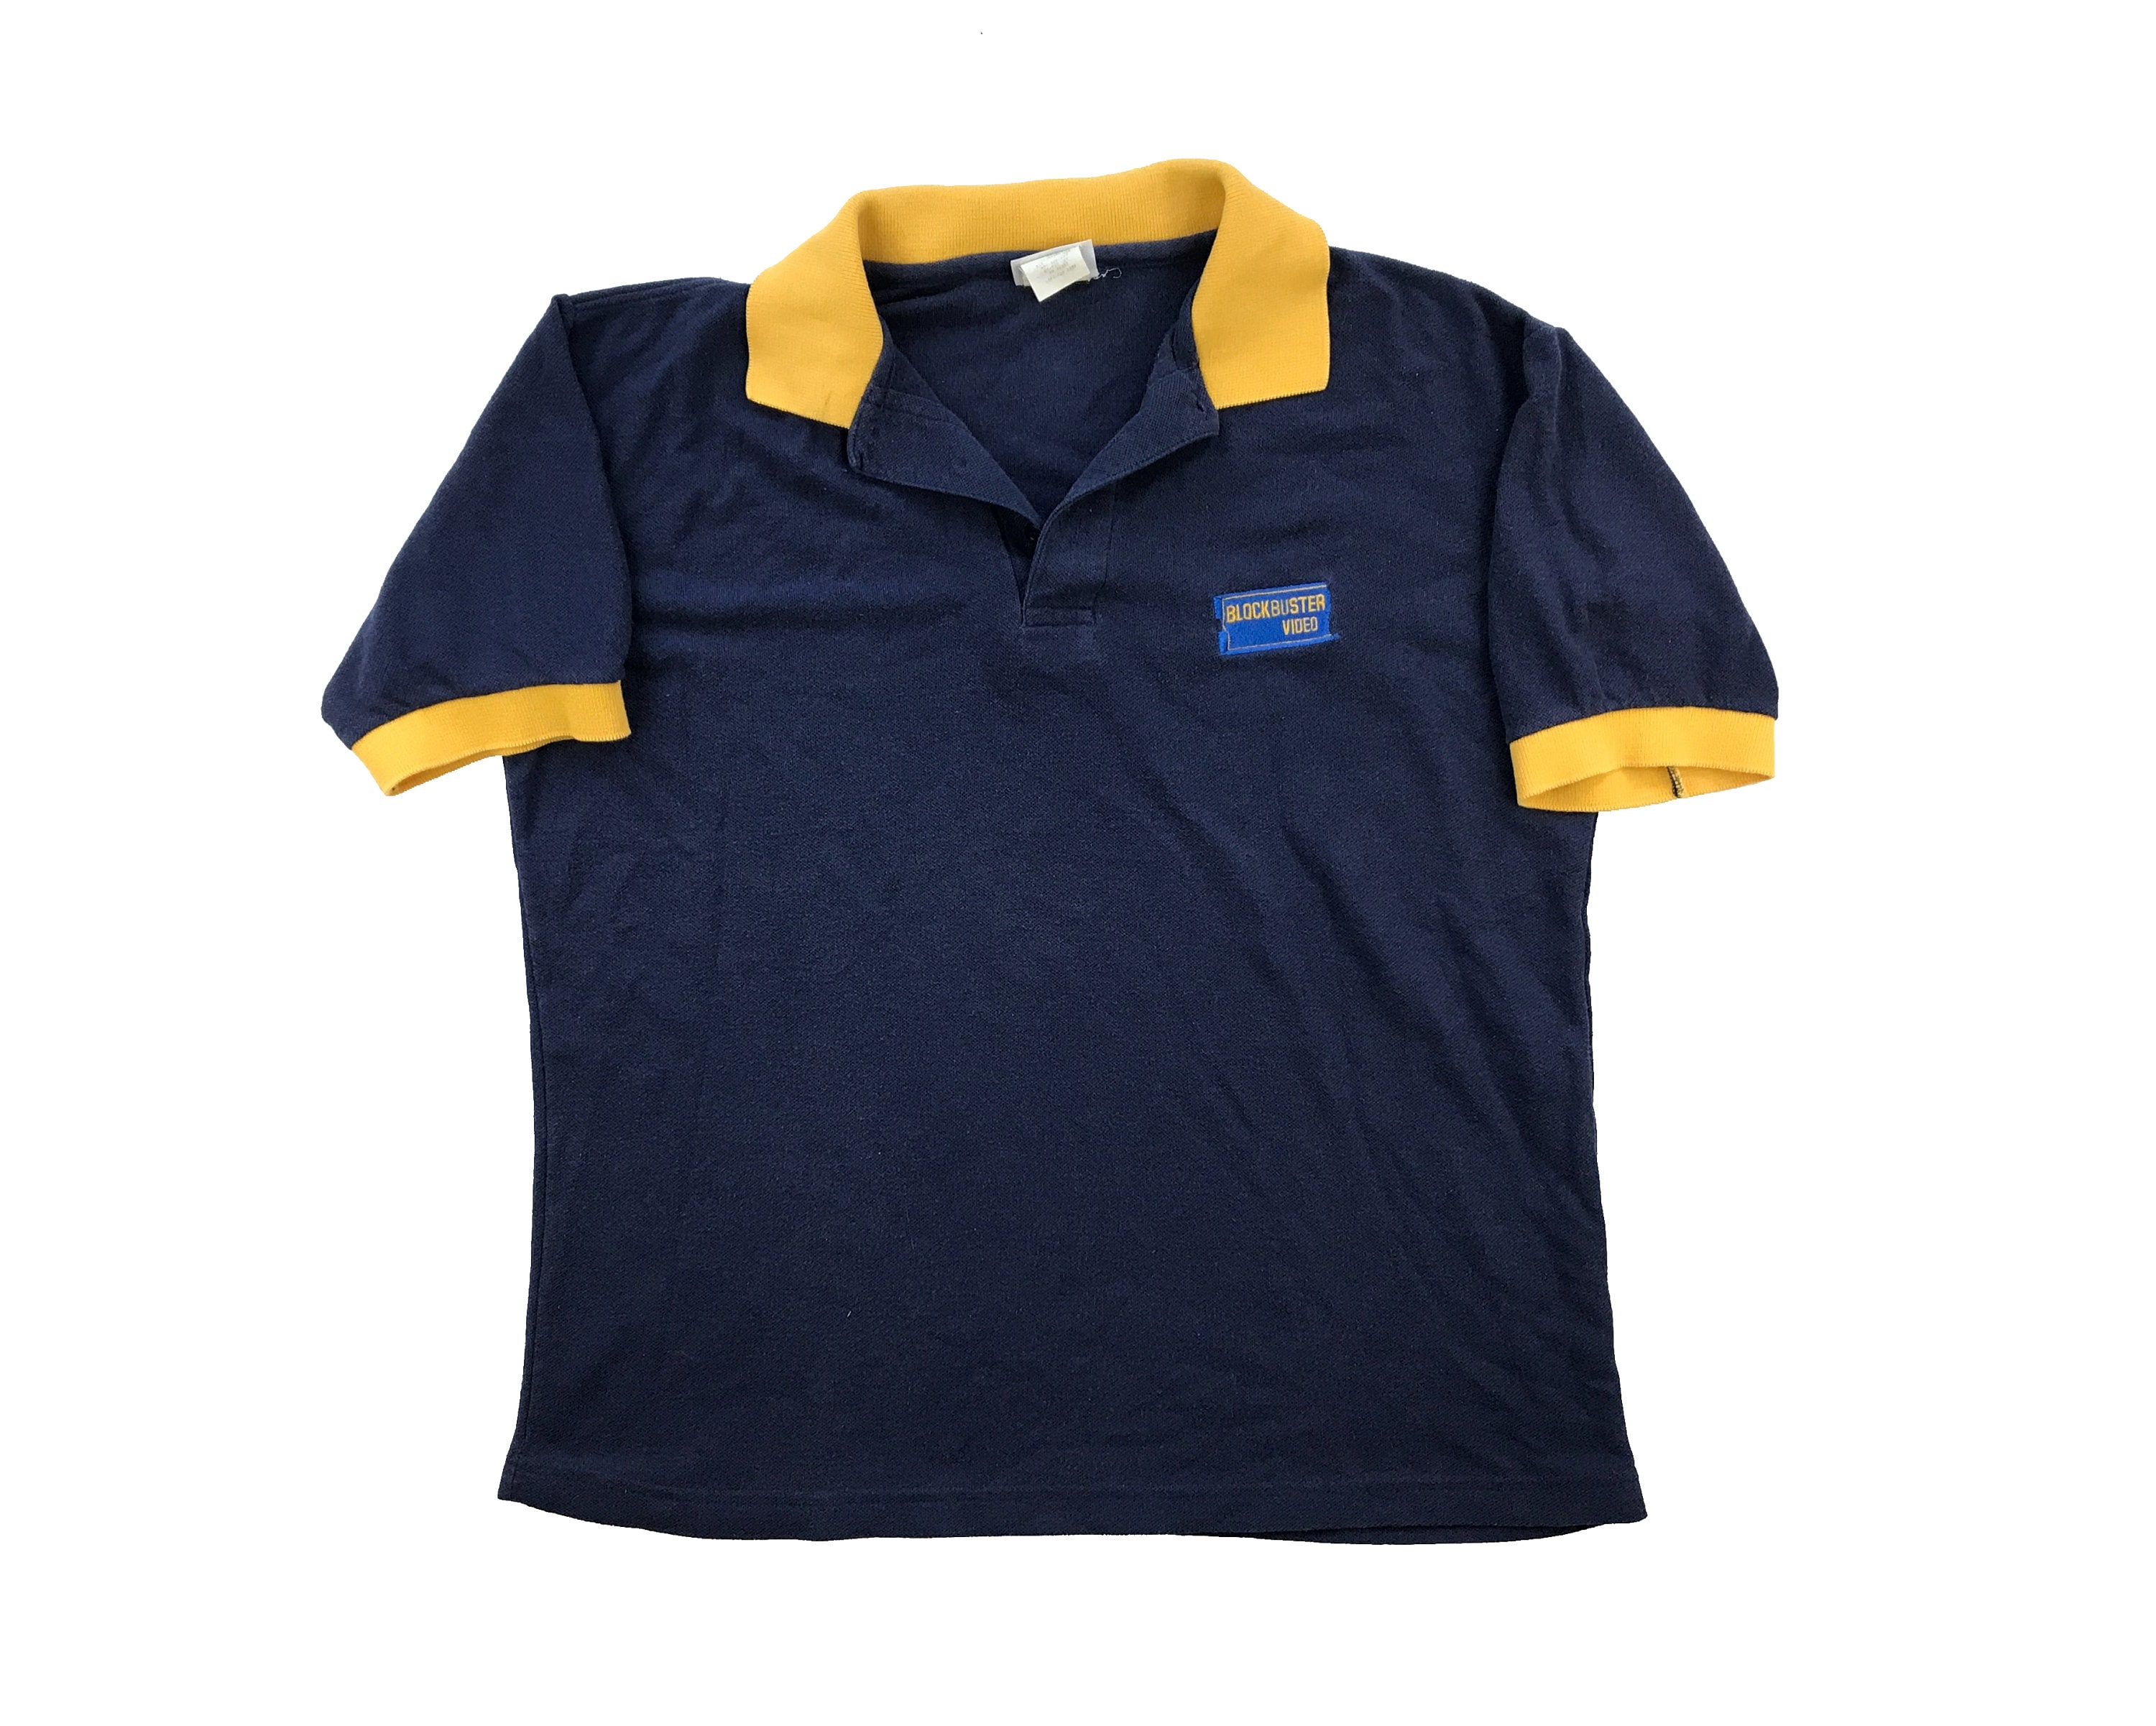 Vintage Blockbuster Polo Shirt Employee Uniform 90s Be Kind Rewind ...